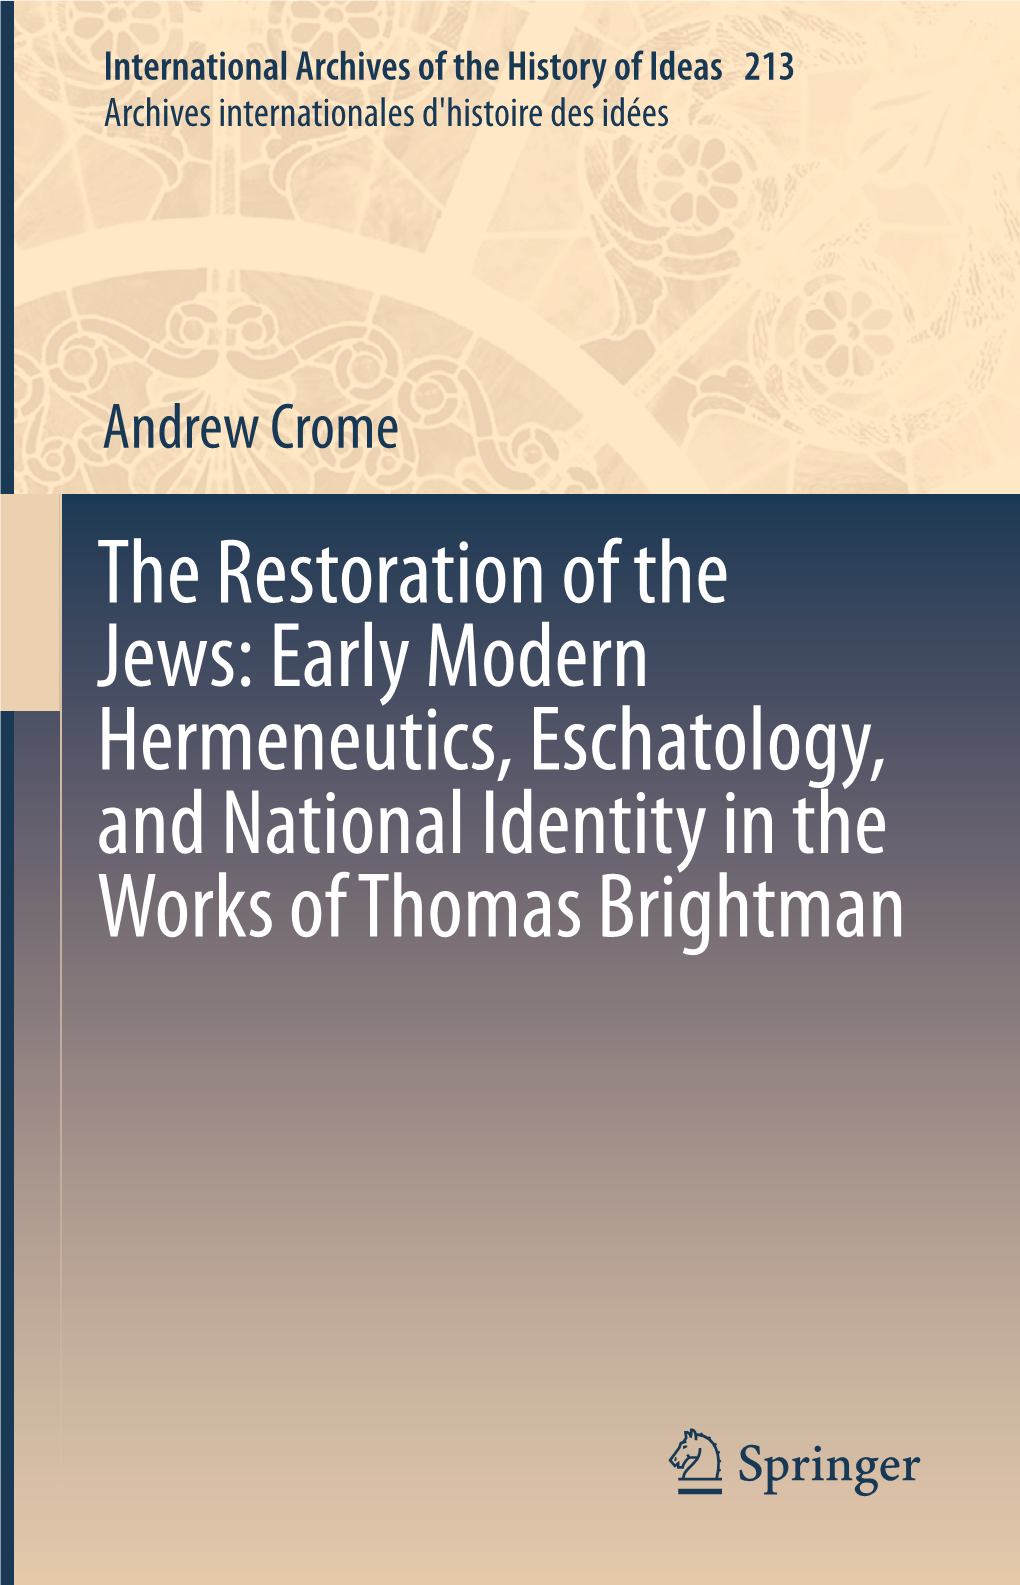 Early Modern Hermeneutics, Eschatology, and National Identity